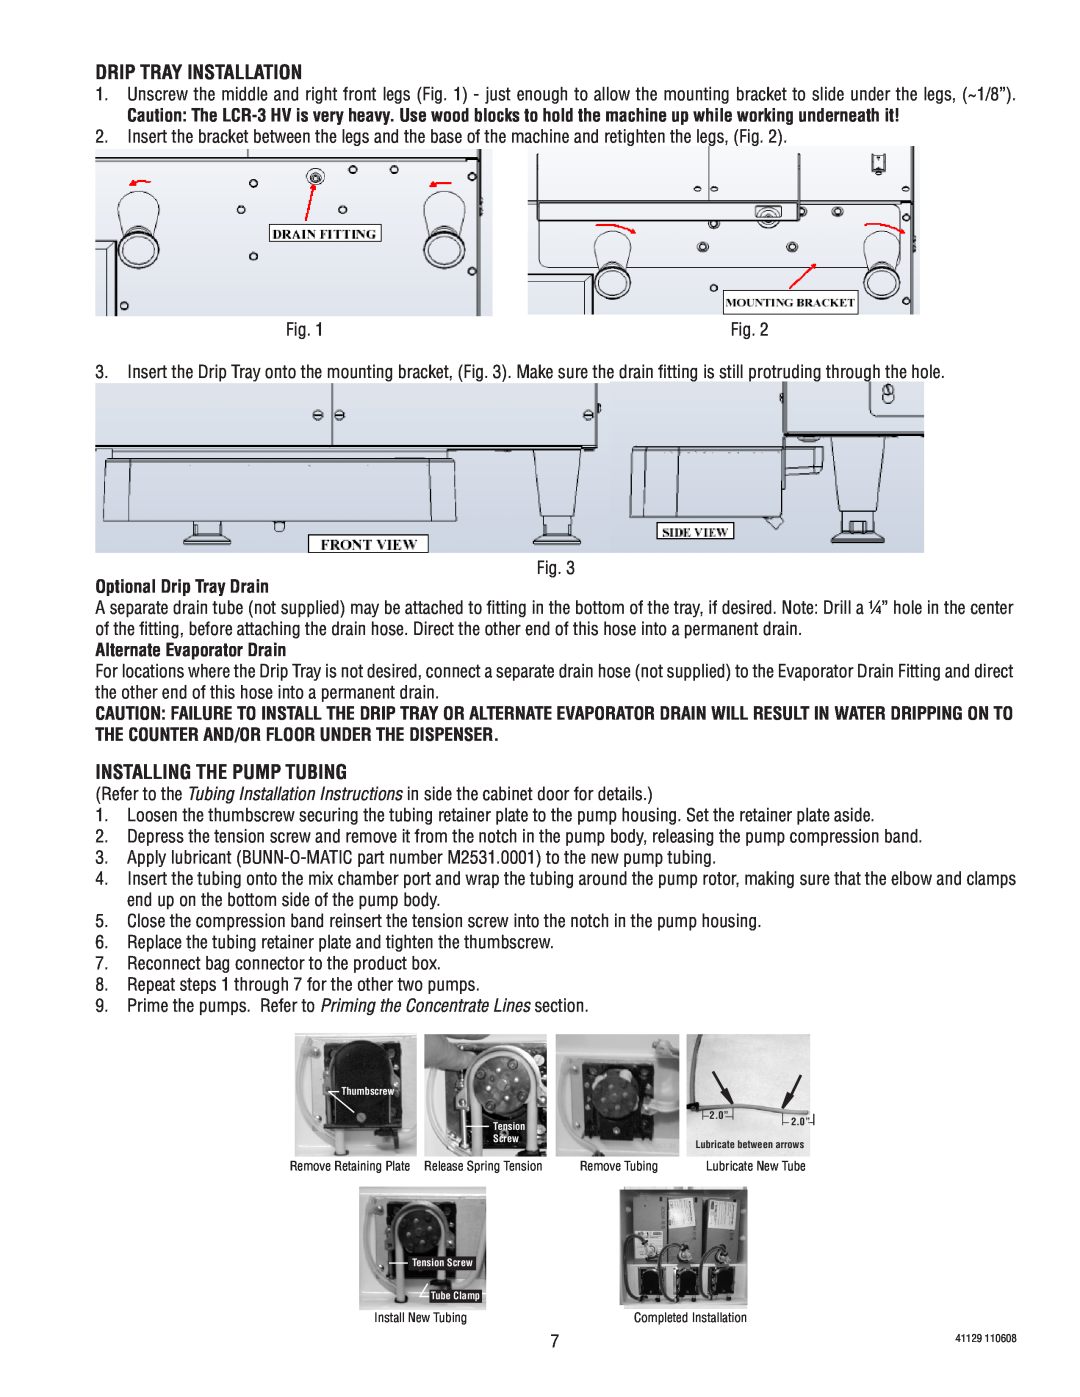 Bunn LCR-3 Drip Tray Installation, Installing The Pump Tubing, Optional Drip Tray Drain, Alternate Evaporator Drain 